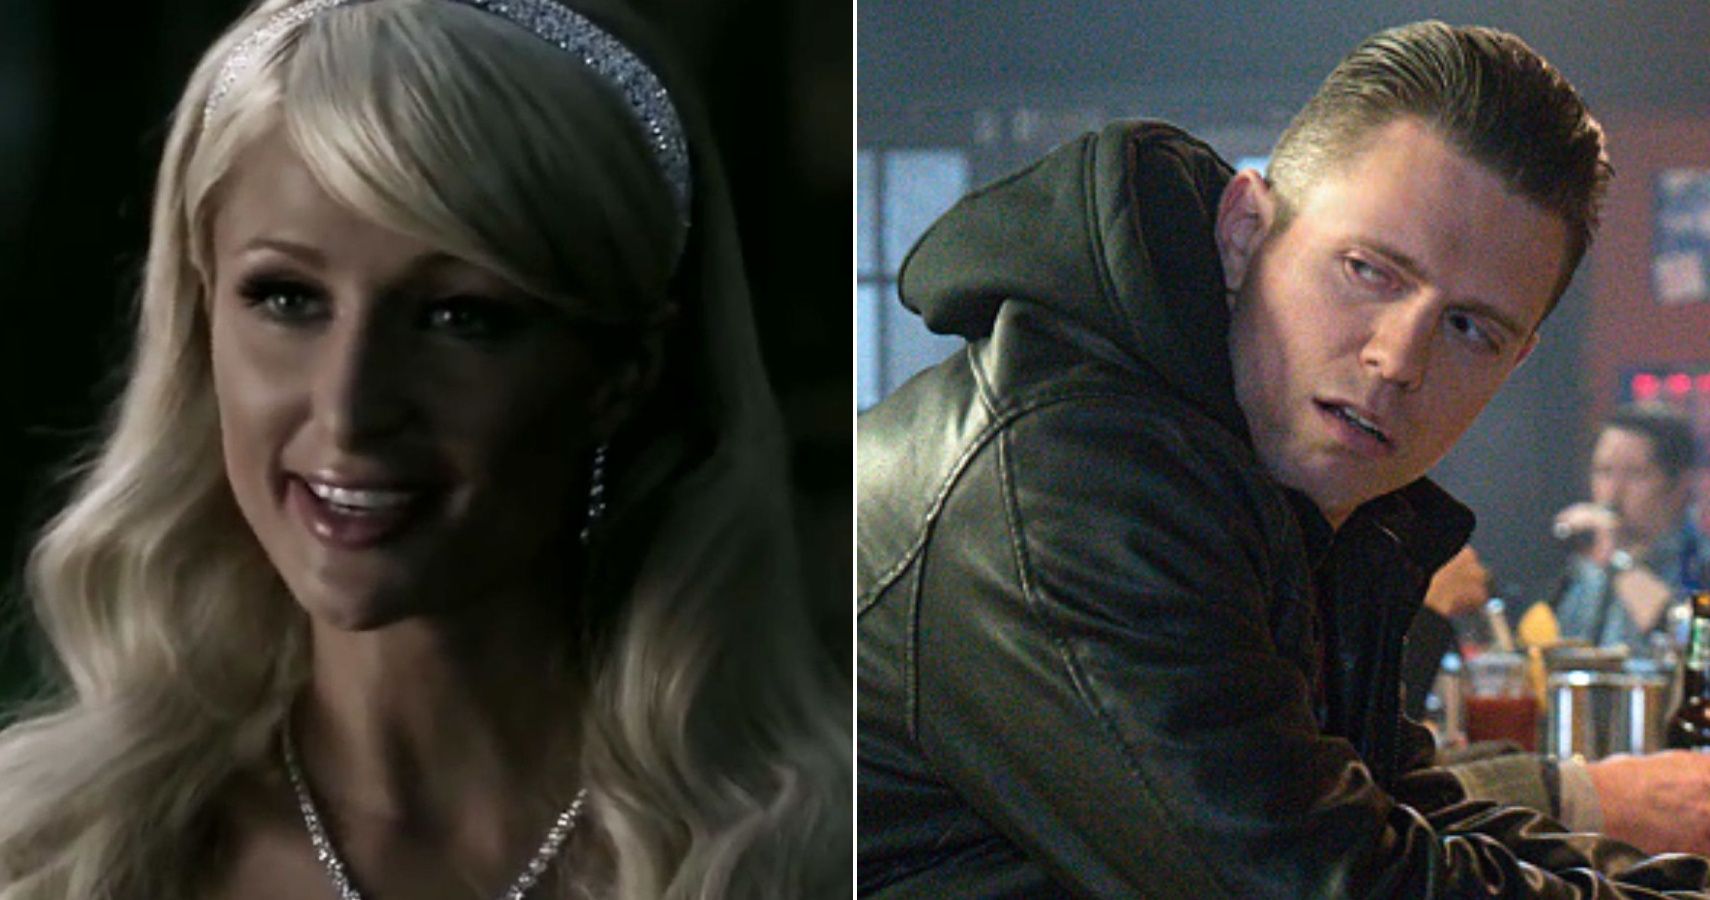 Paris Hilton, The Miz and other celeb cameos in Supernatural